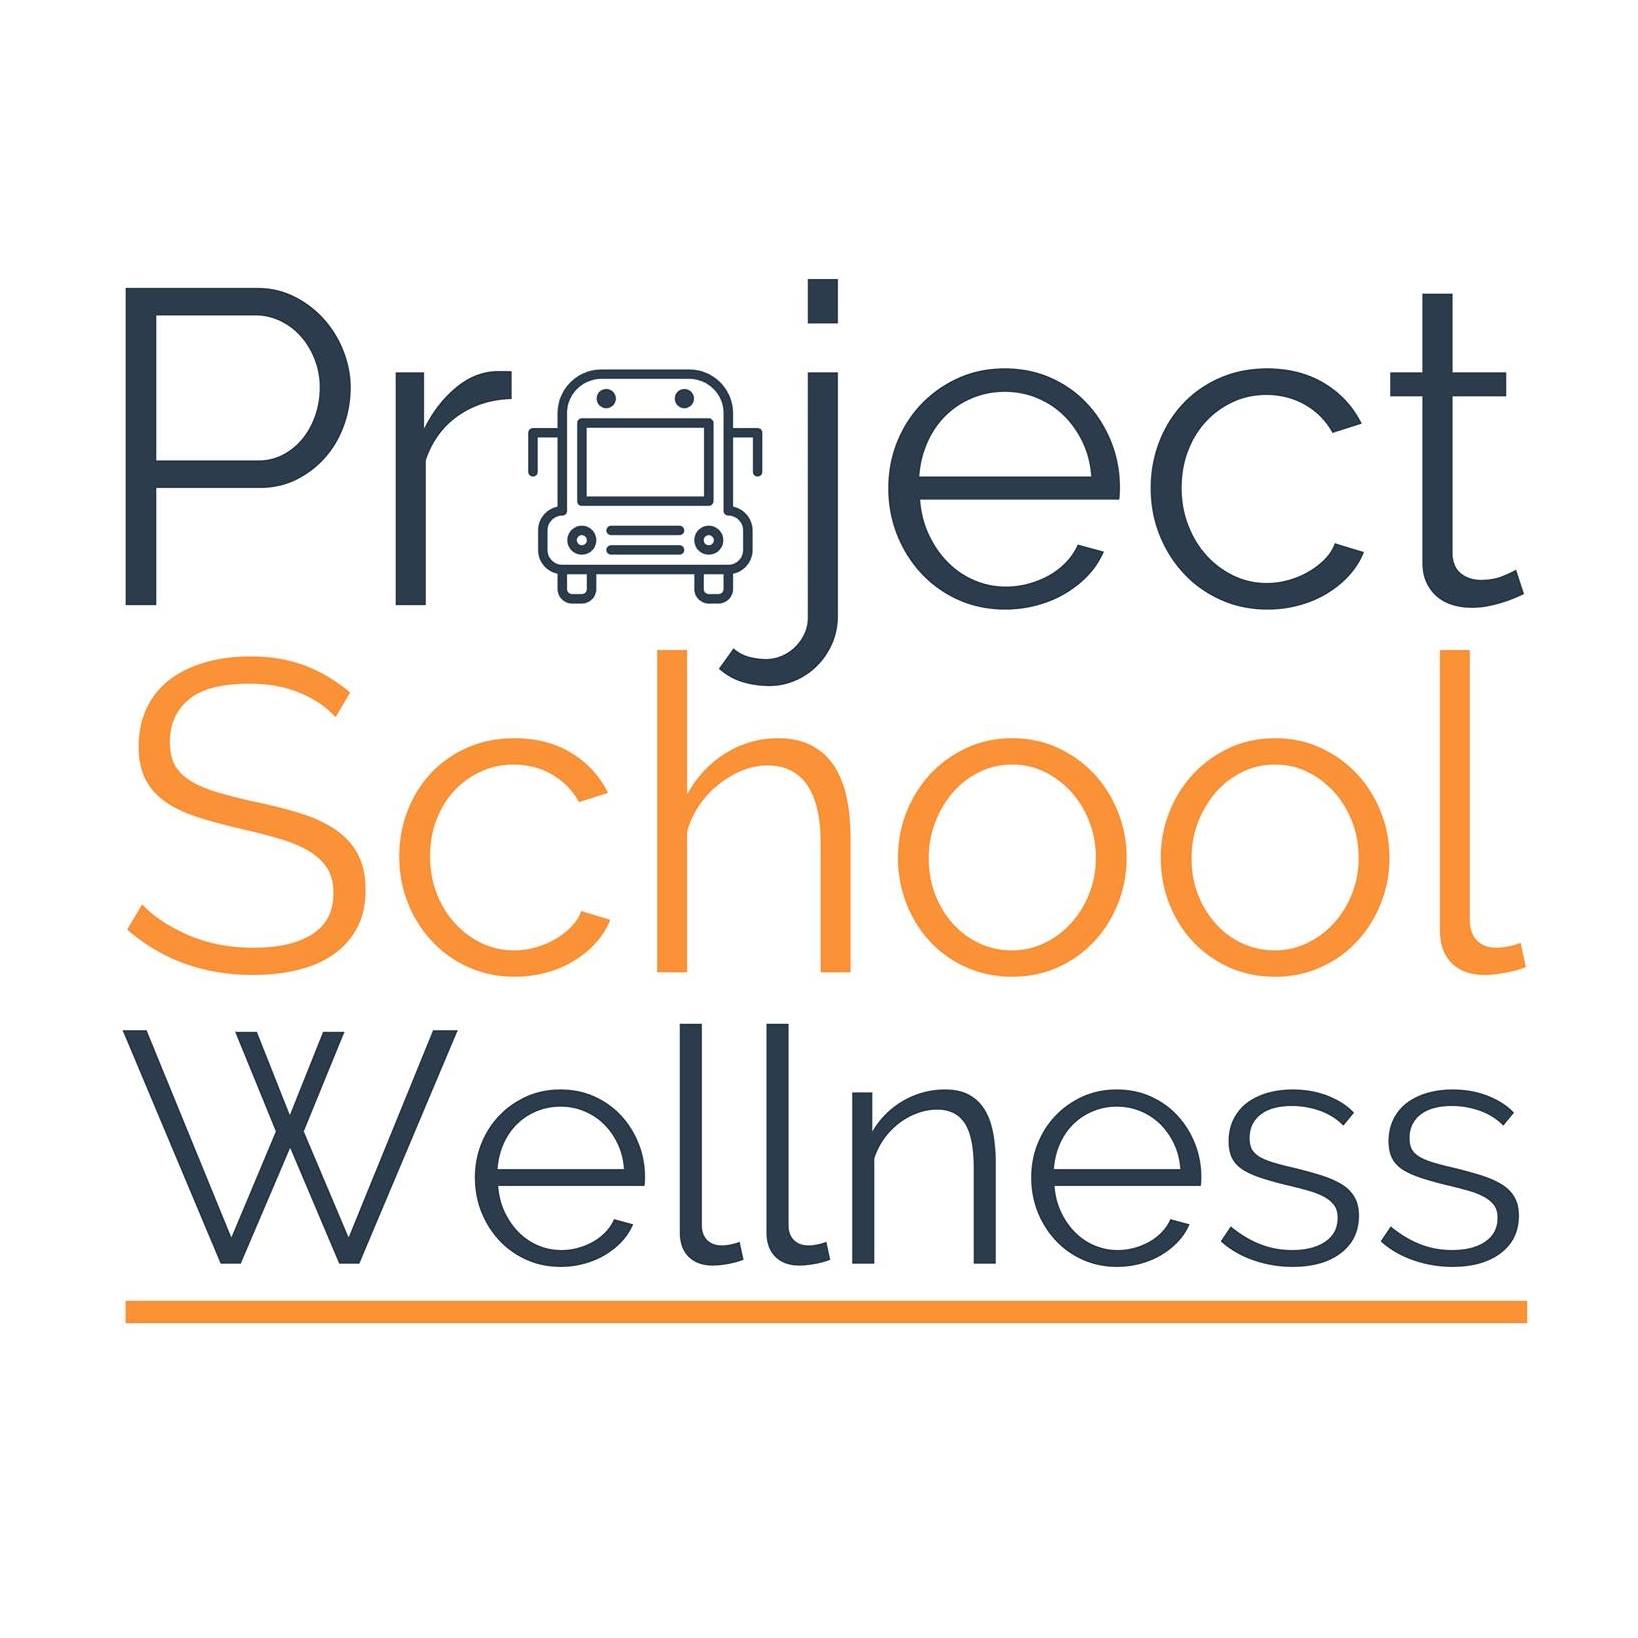 Project School Wellness